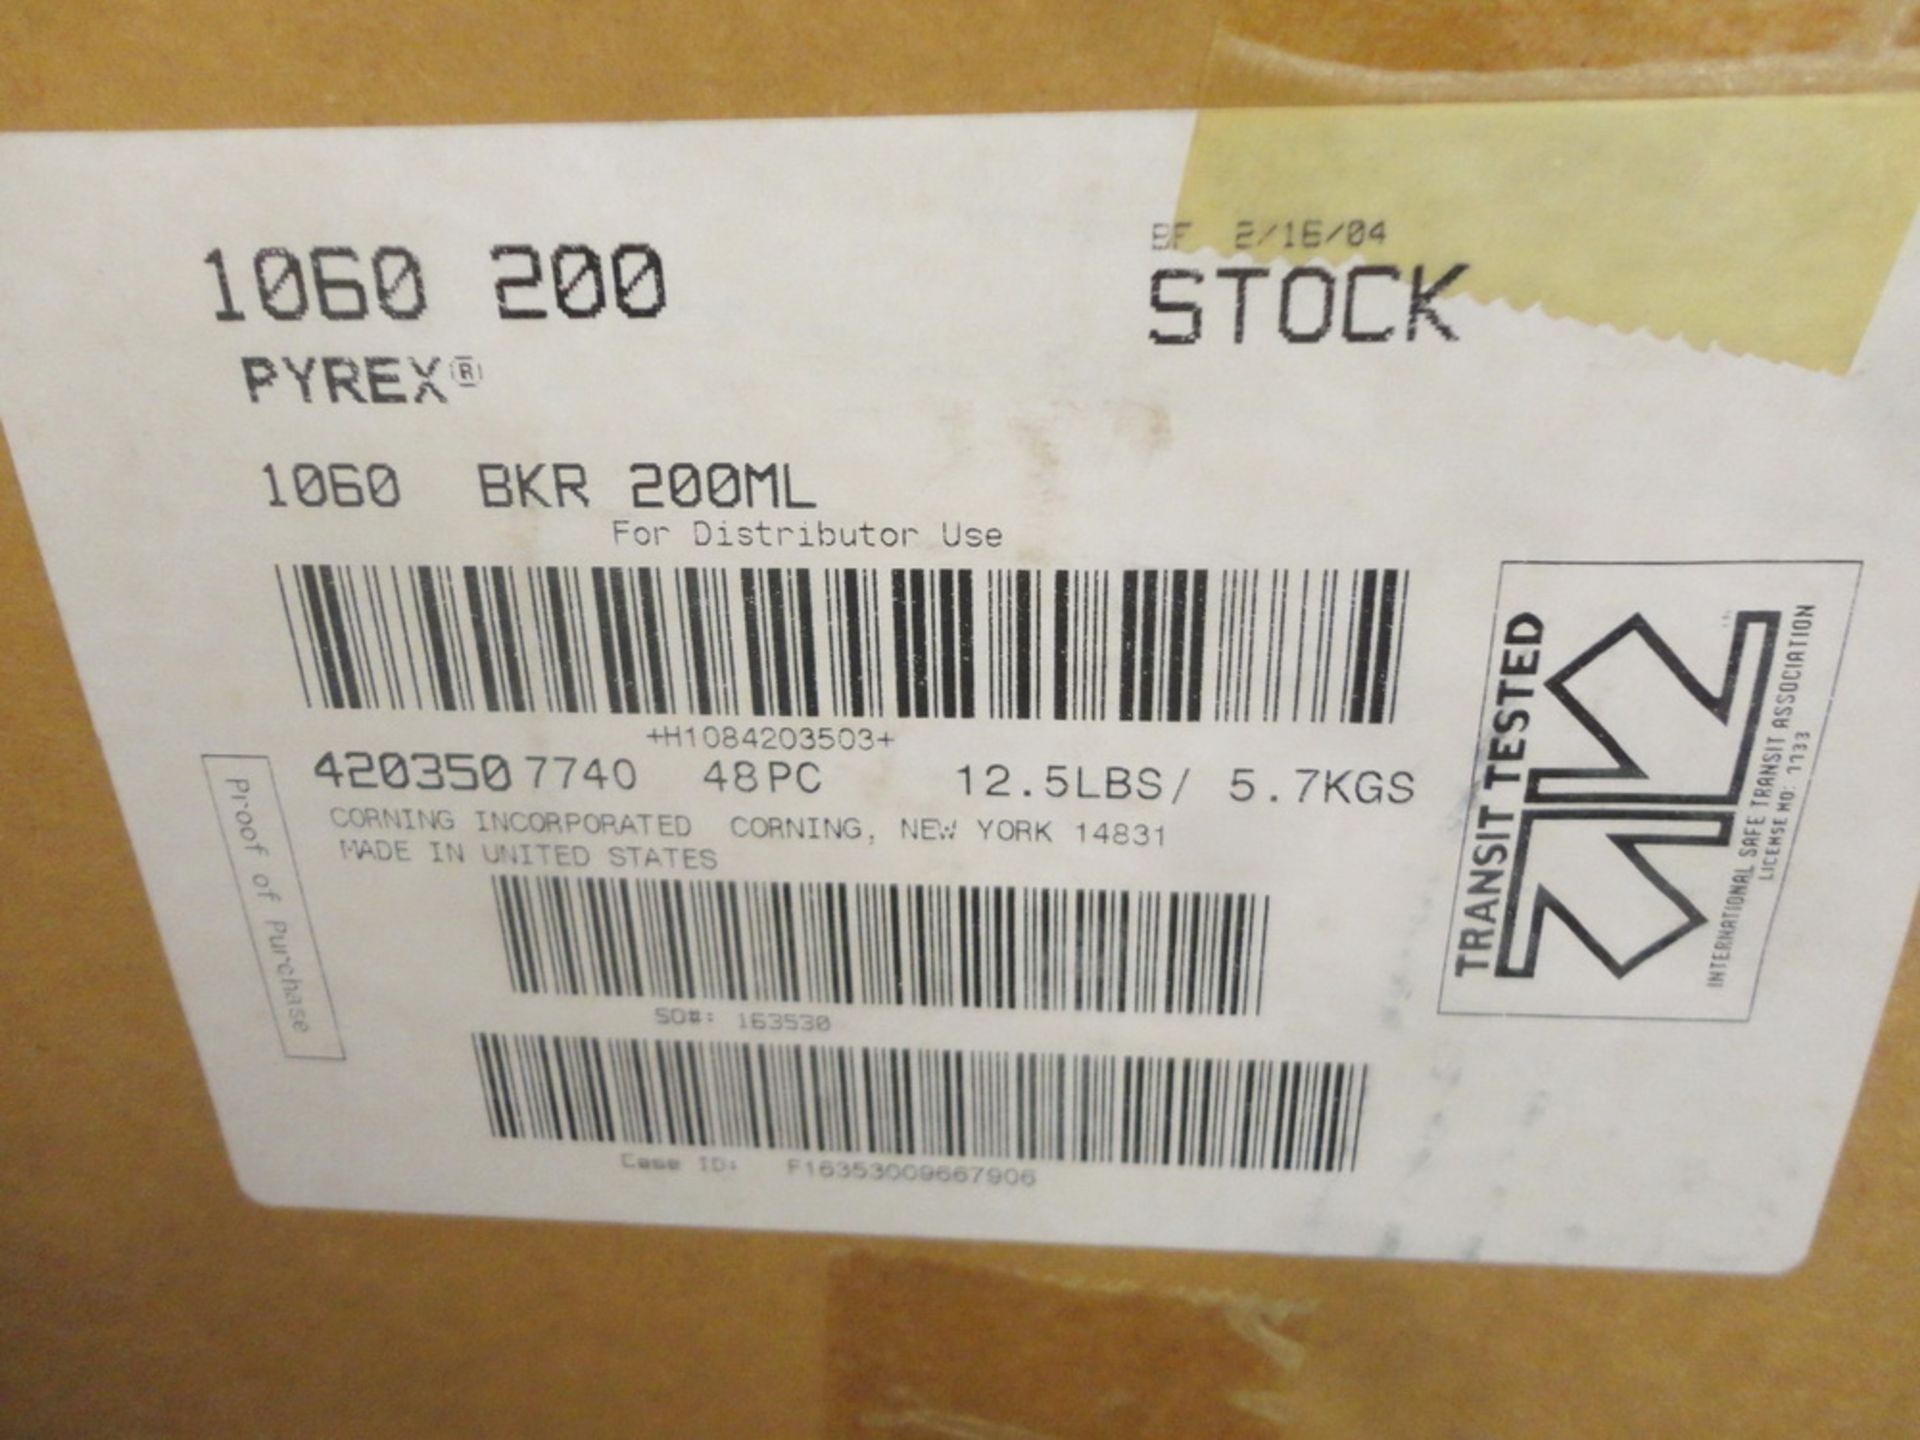 (5) Boxes of unused Corning Pyrex 200 ml beakers, 12 beakers per box